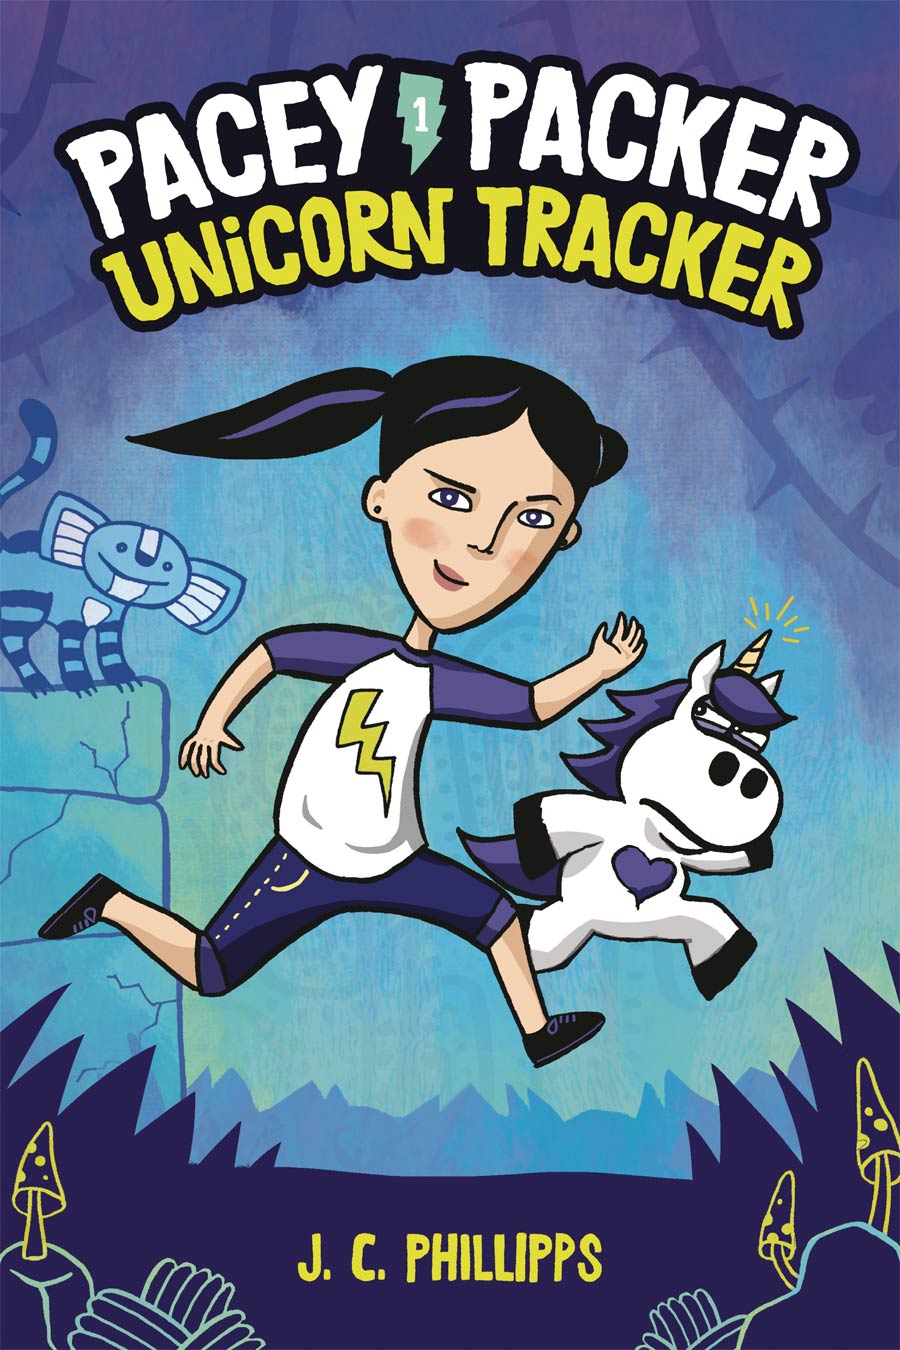 Pacey Packer Unicorn Tracker Vol 1 HC